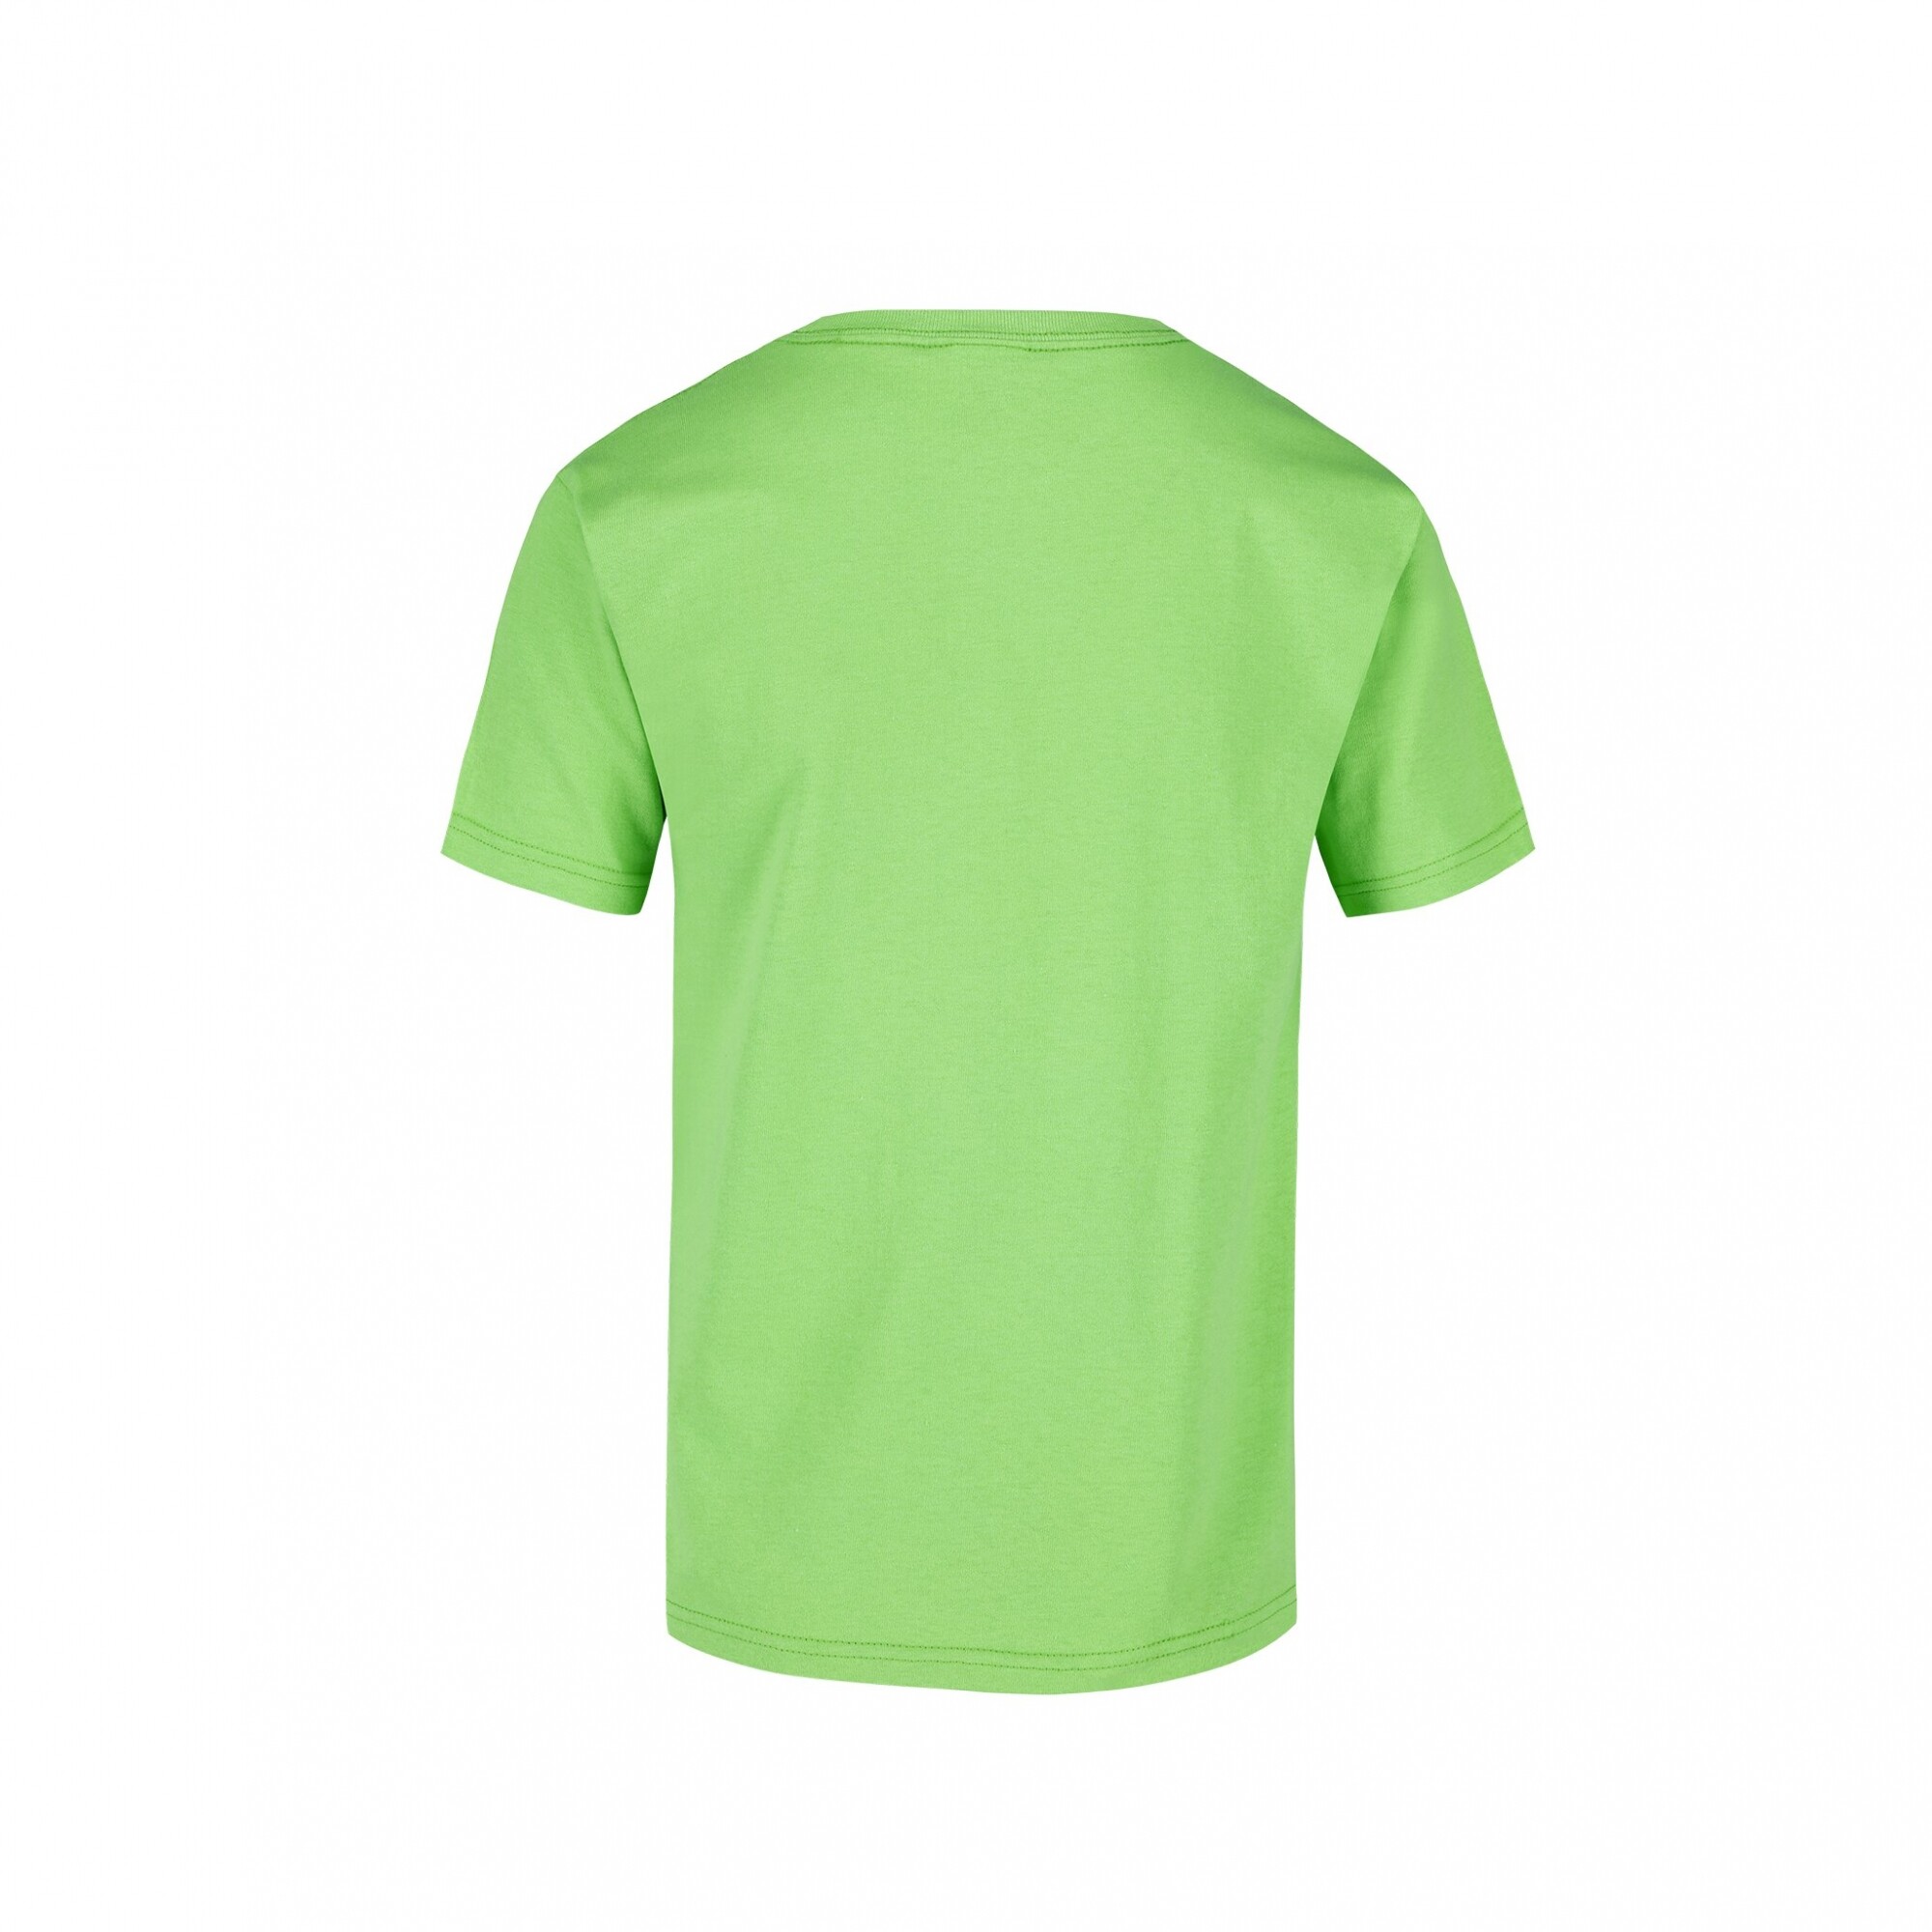 Camiseta manga corta verde lima m